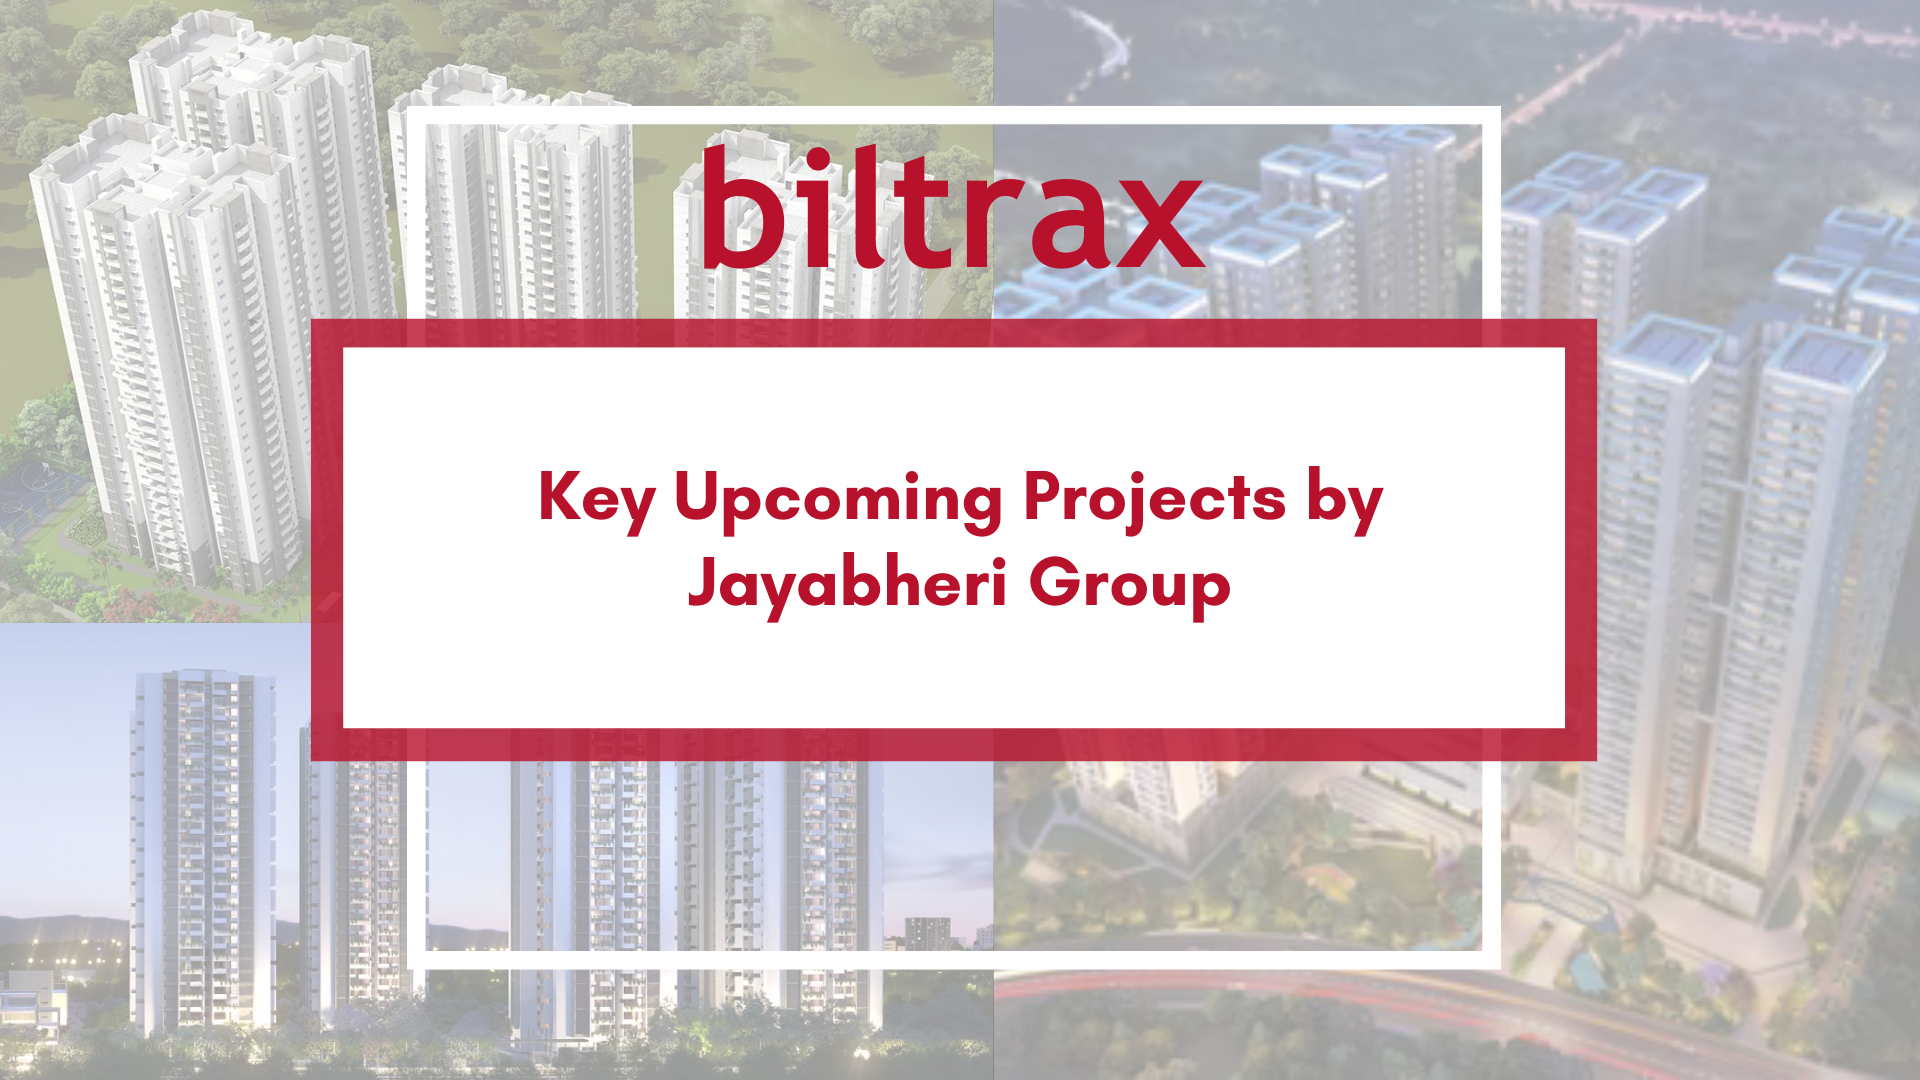 Jayabheri Group key upcoming projects